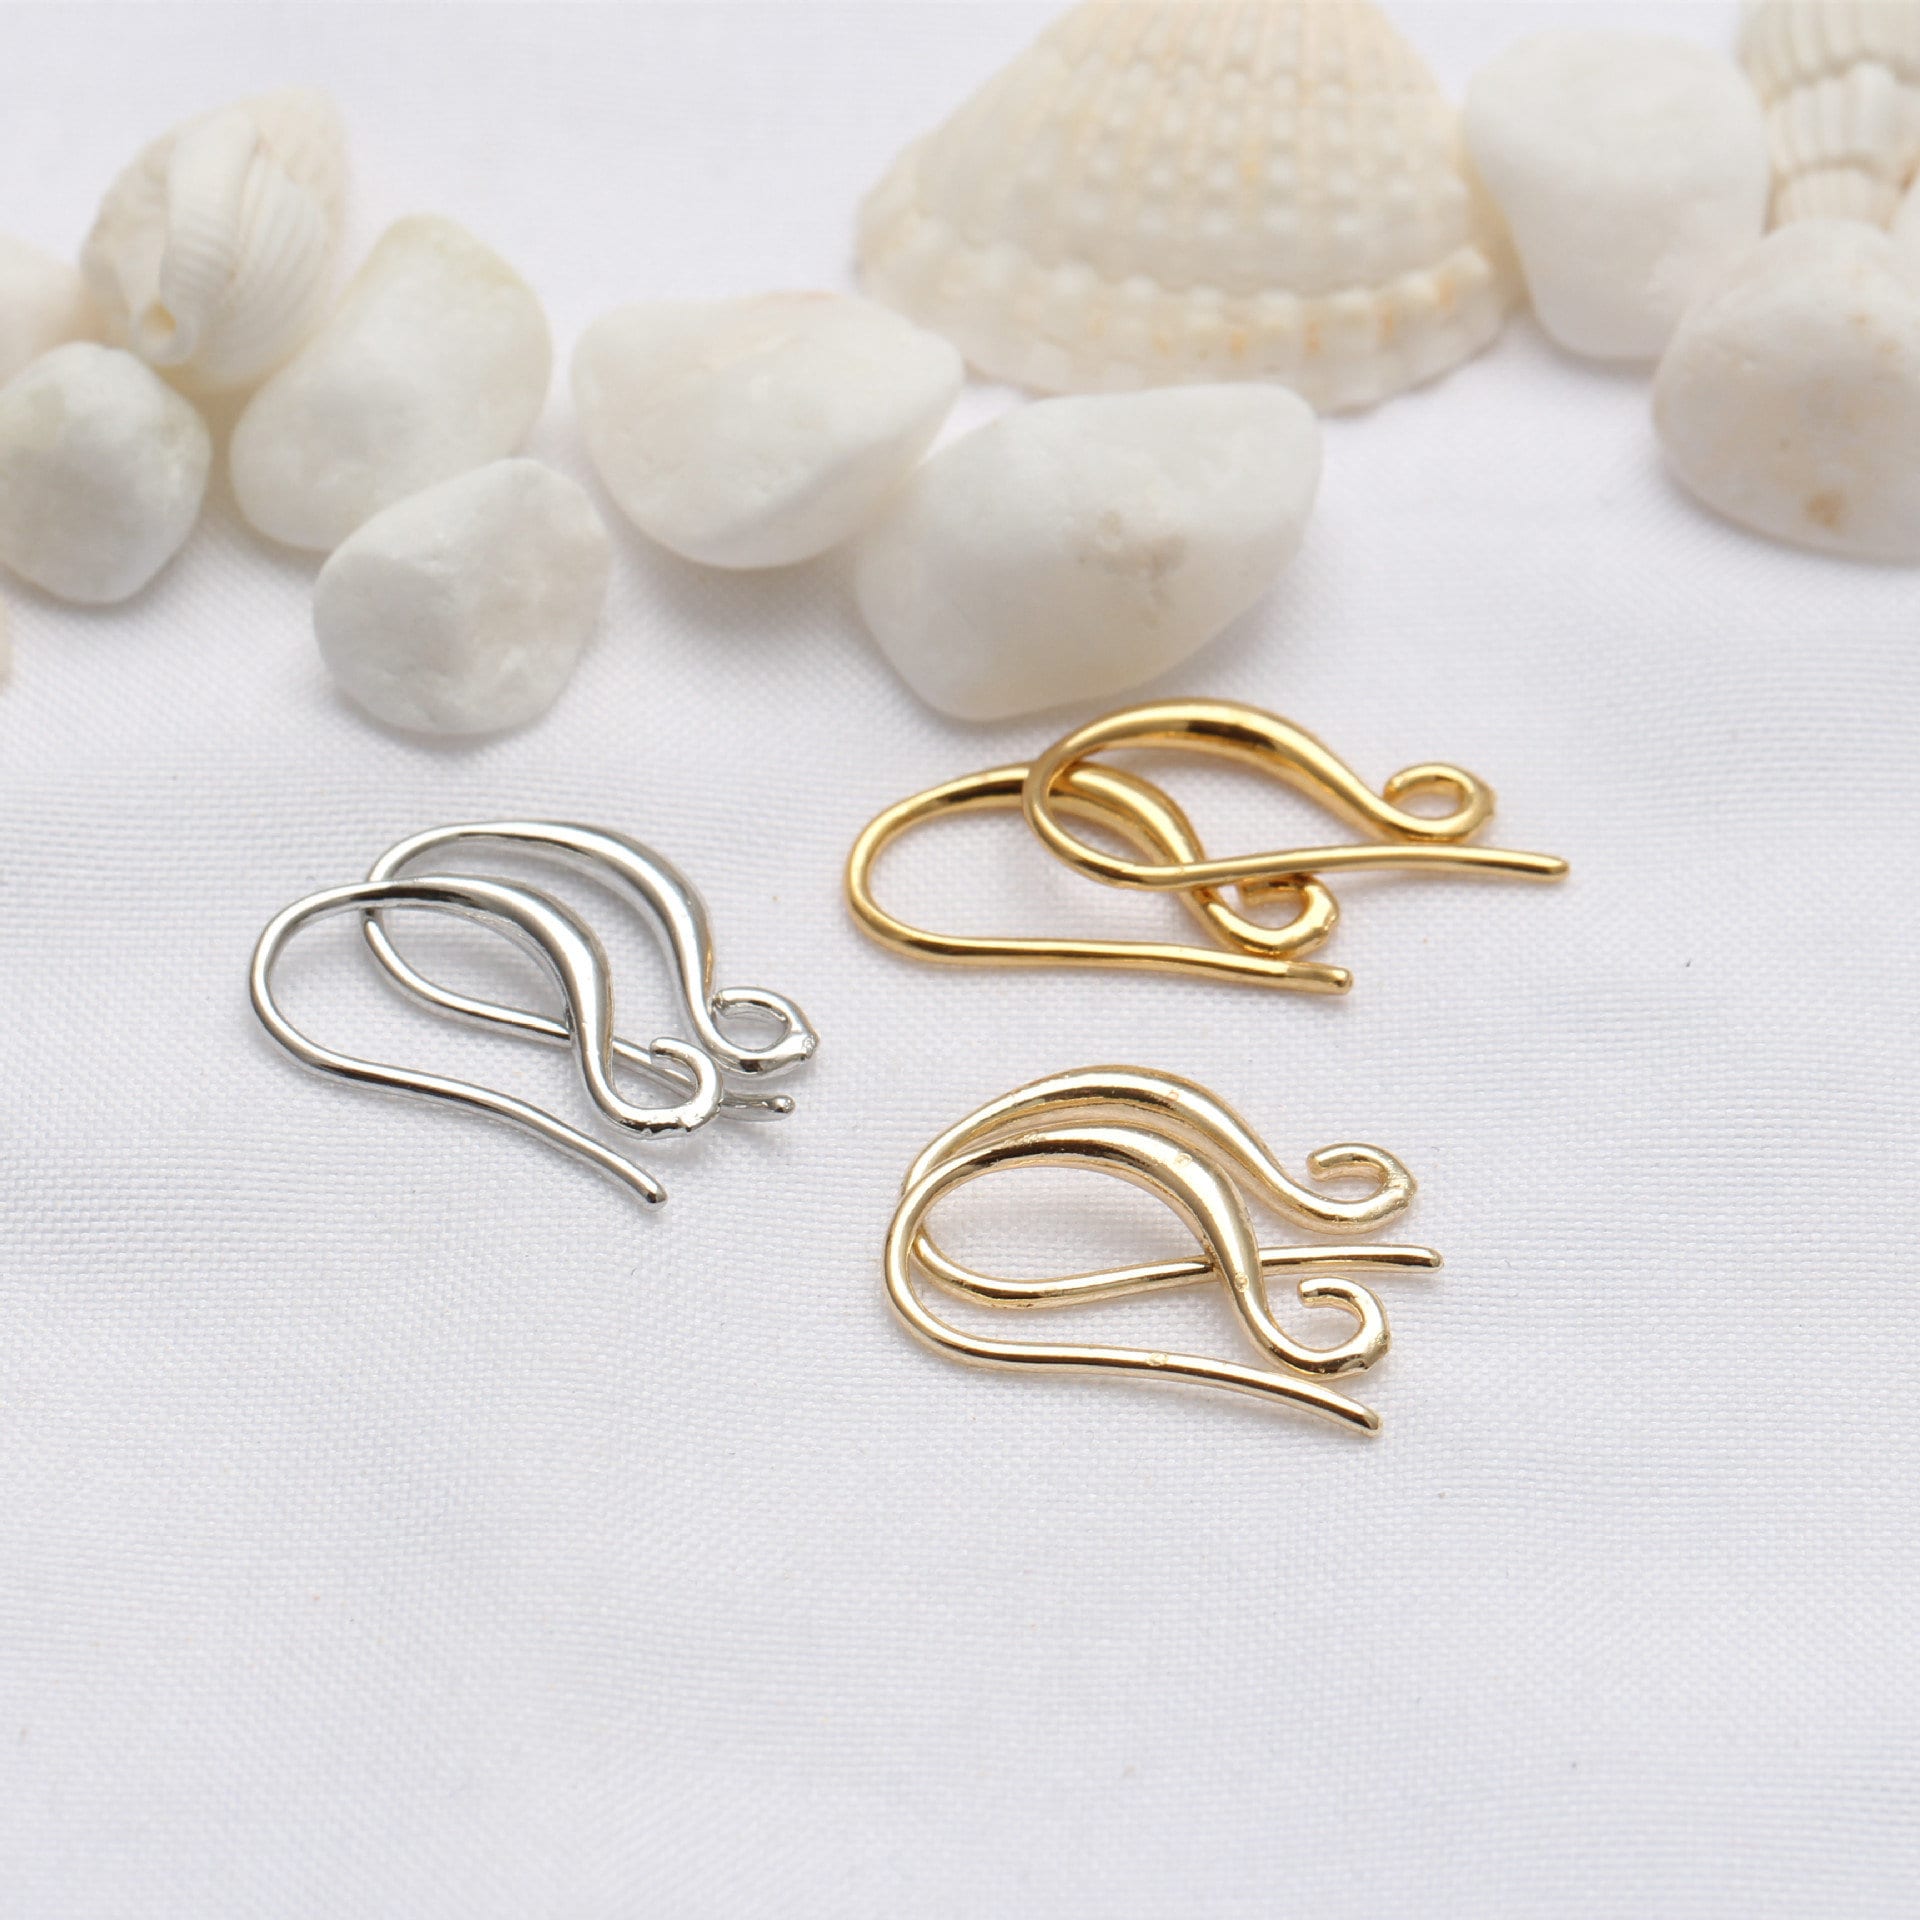 Kurtzy 500 Pack Silver Plated Earring Hook Earrings by Nickel Free - Jewellery Making Findings 